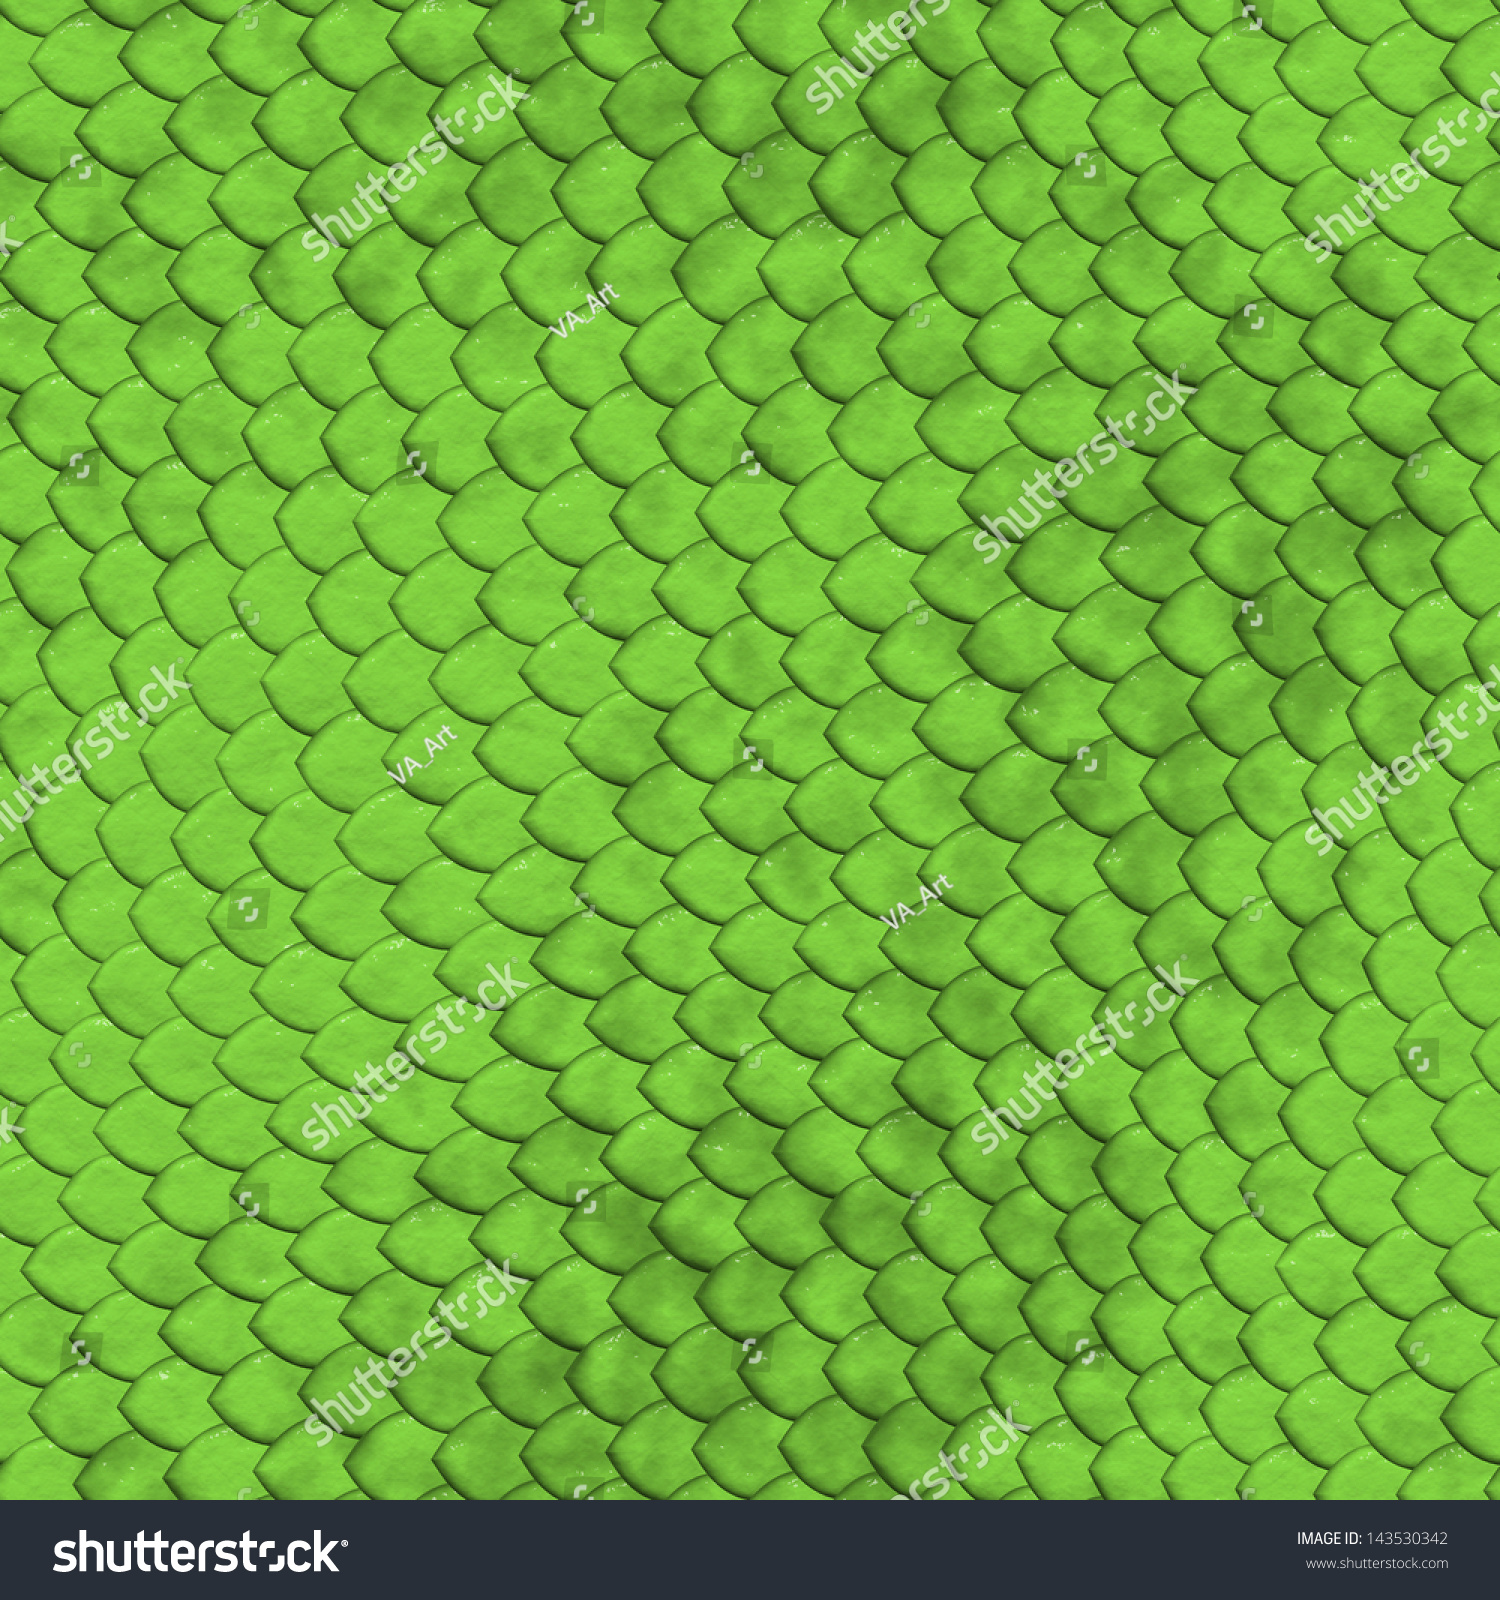 Reptile Texture. Illustration. Seamless. - 143530342 : Shutterstock